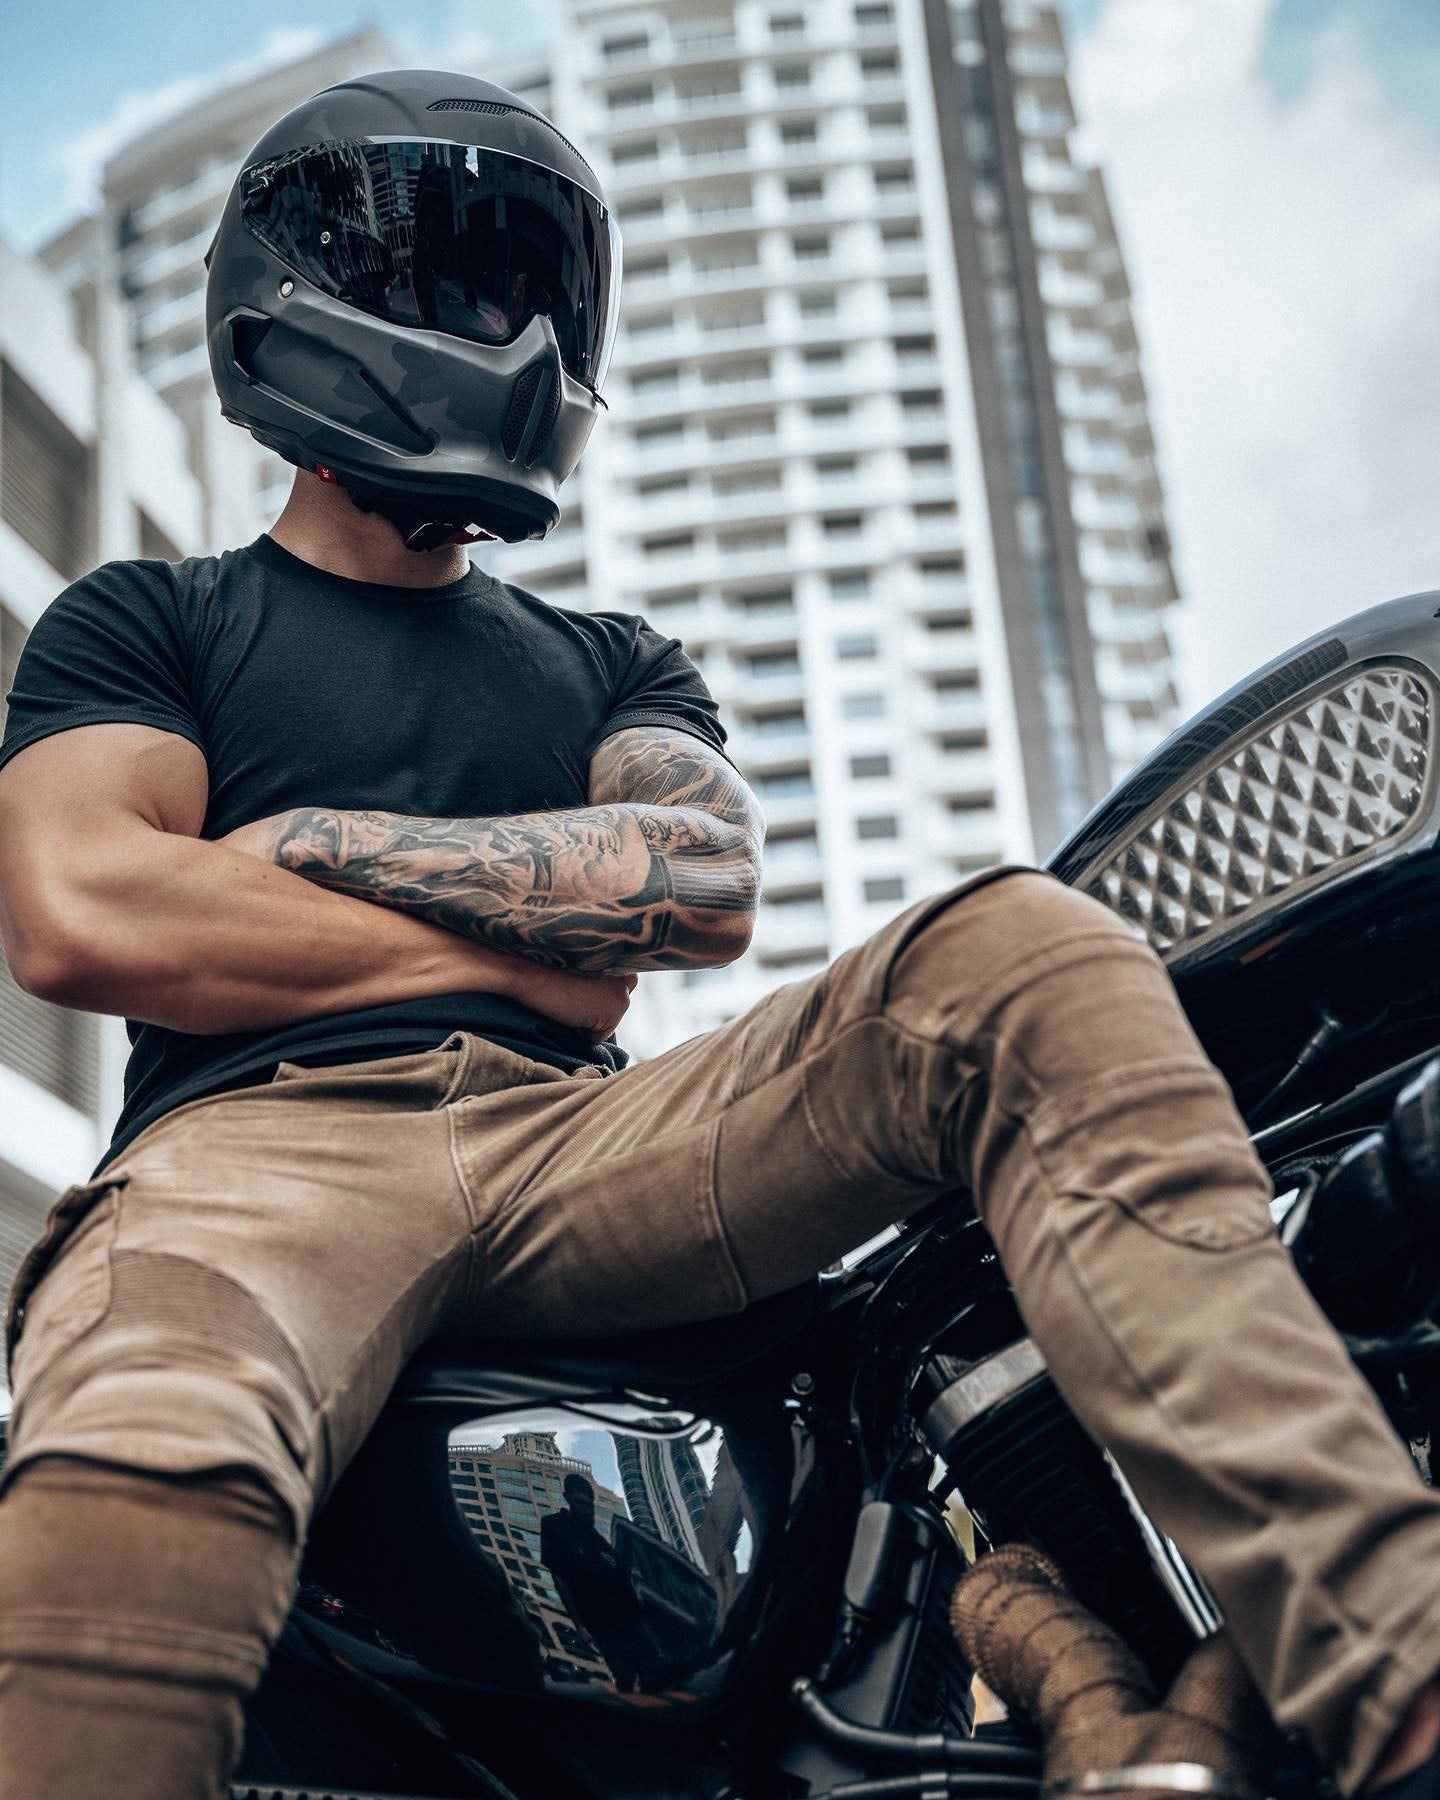 ChangLL Motorcycle Protective Gear Bundle-Helmet, India | Ubuy